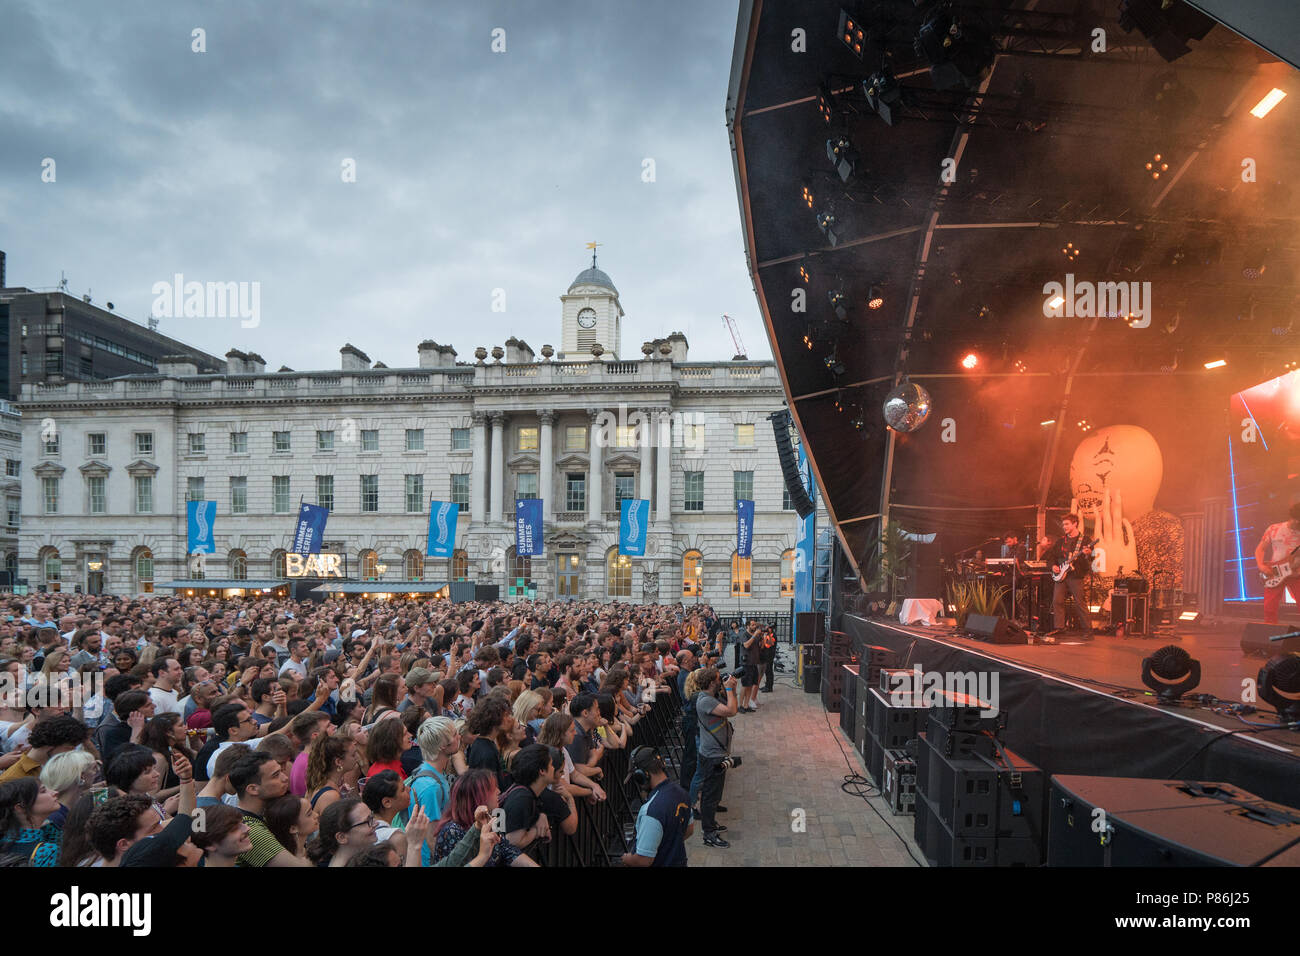 MGMT performing live sul palco del Somerset House di Londra come parte del Somerset House serie d'estate. Data foto: lunedì 9 luglio 2018. Foto: Roger Garfield/Alamy Foto Stock